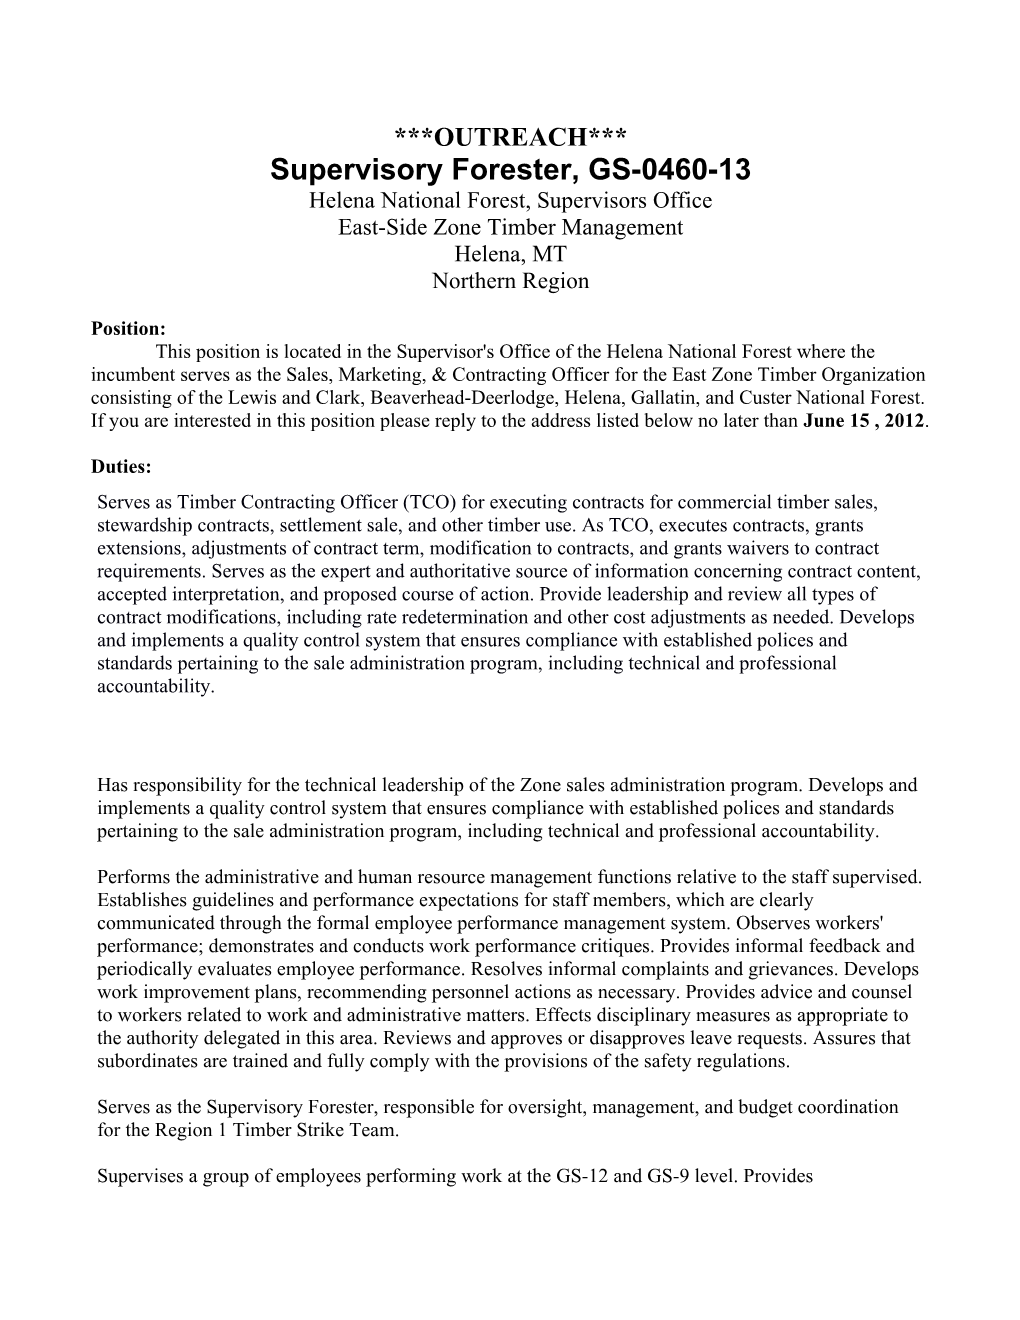 Supervisory Forester, GS-0460-13